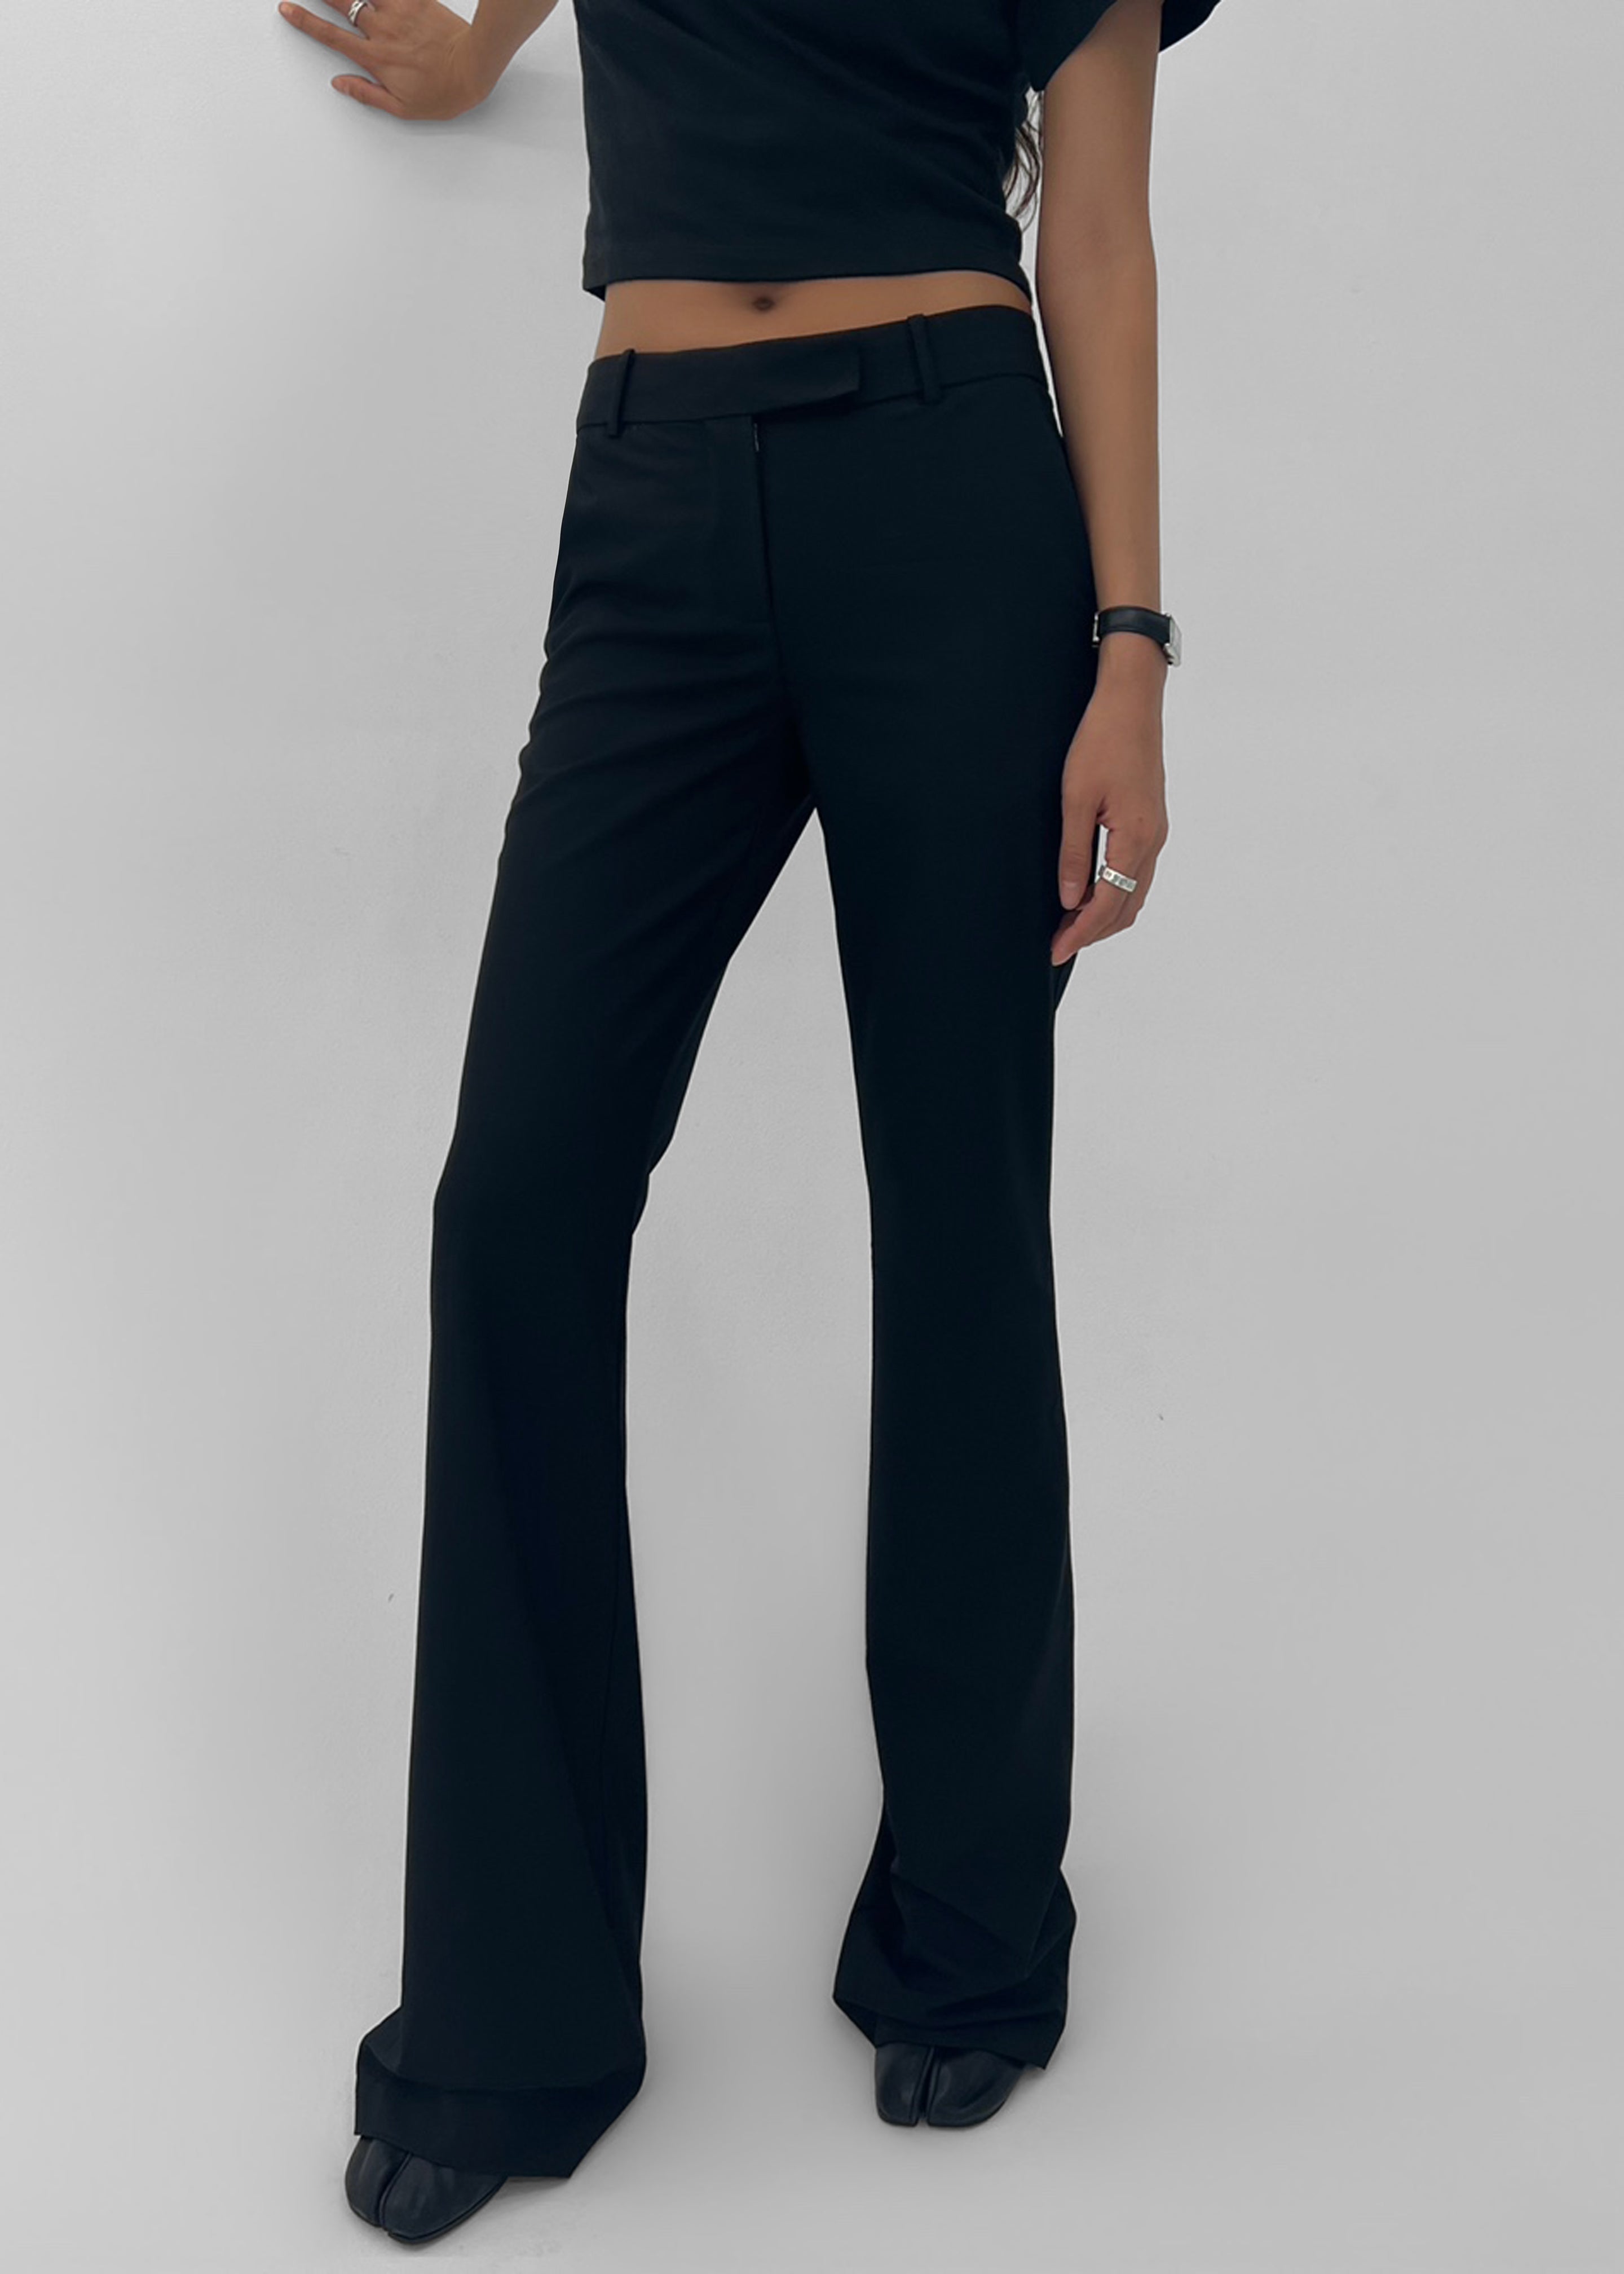 Bootcut Trousers  Black - Michal Shop